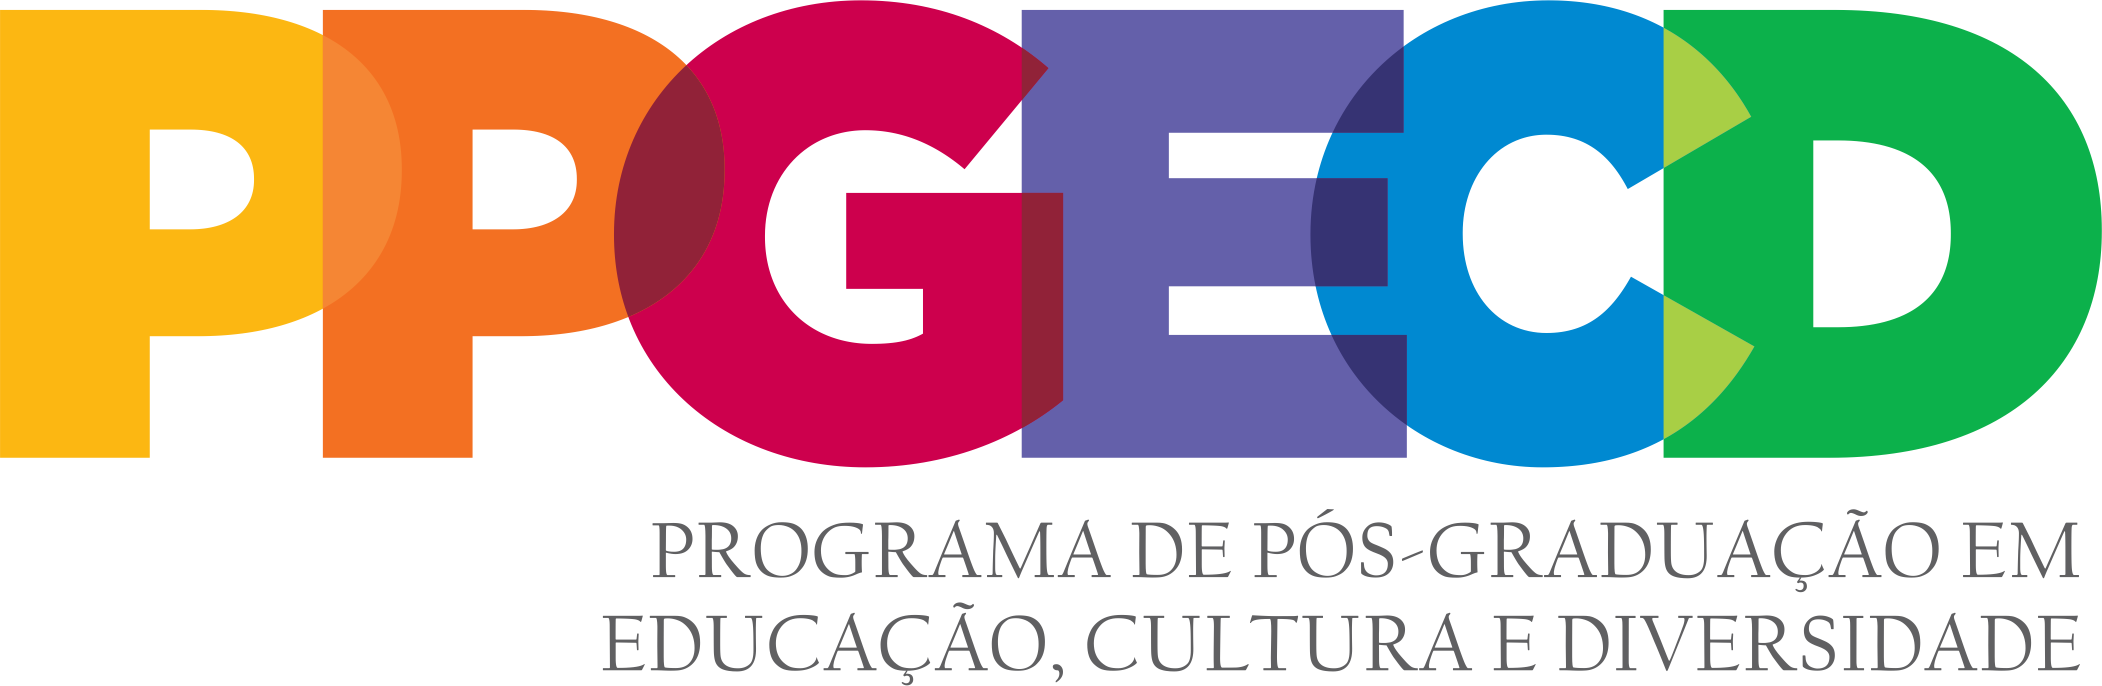 logo ppgecd